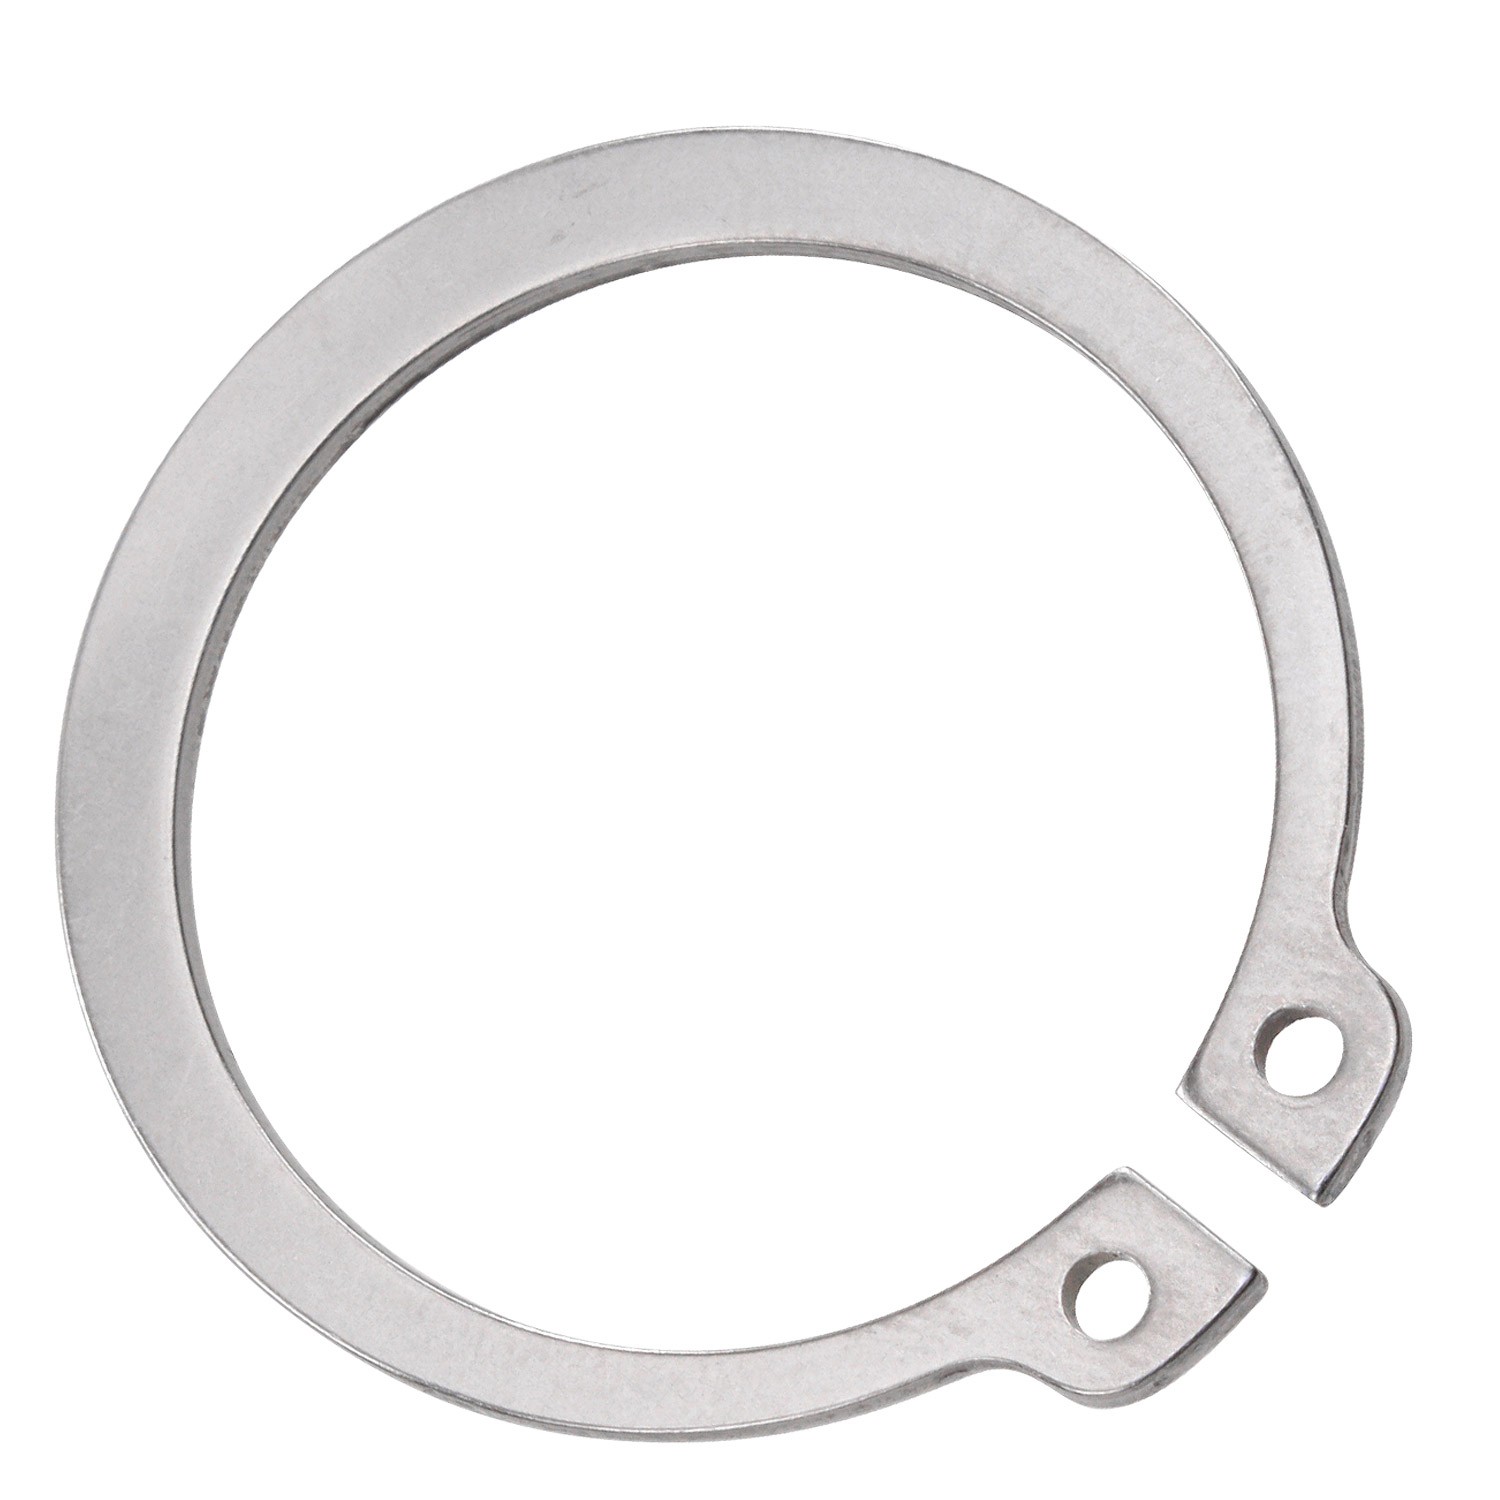 Кольцо стопорное наружное 18х1,2 DIN 471, нержавеющая сталь 1.4122 (А2) - фото